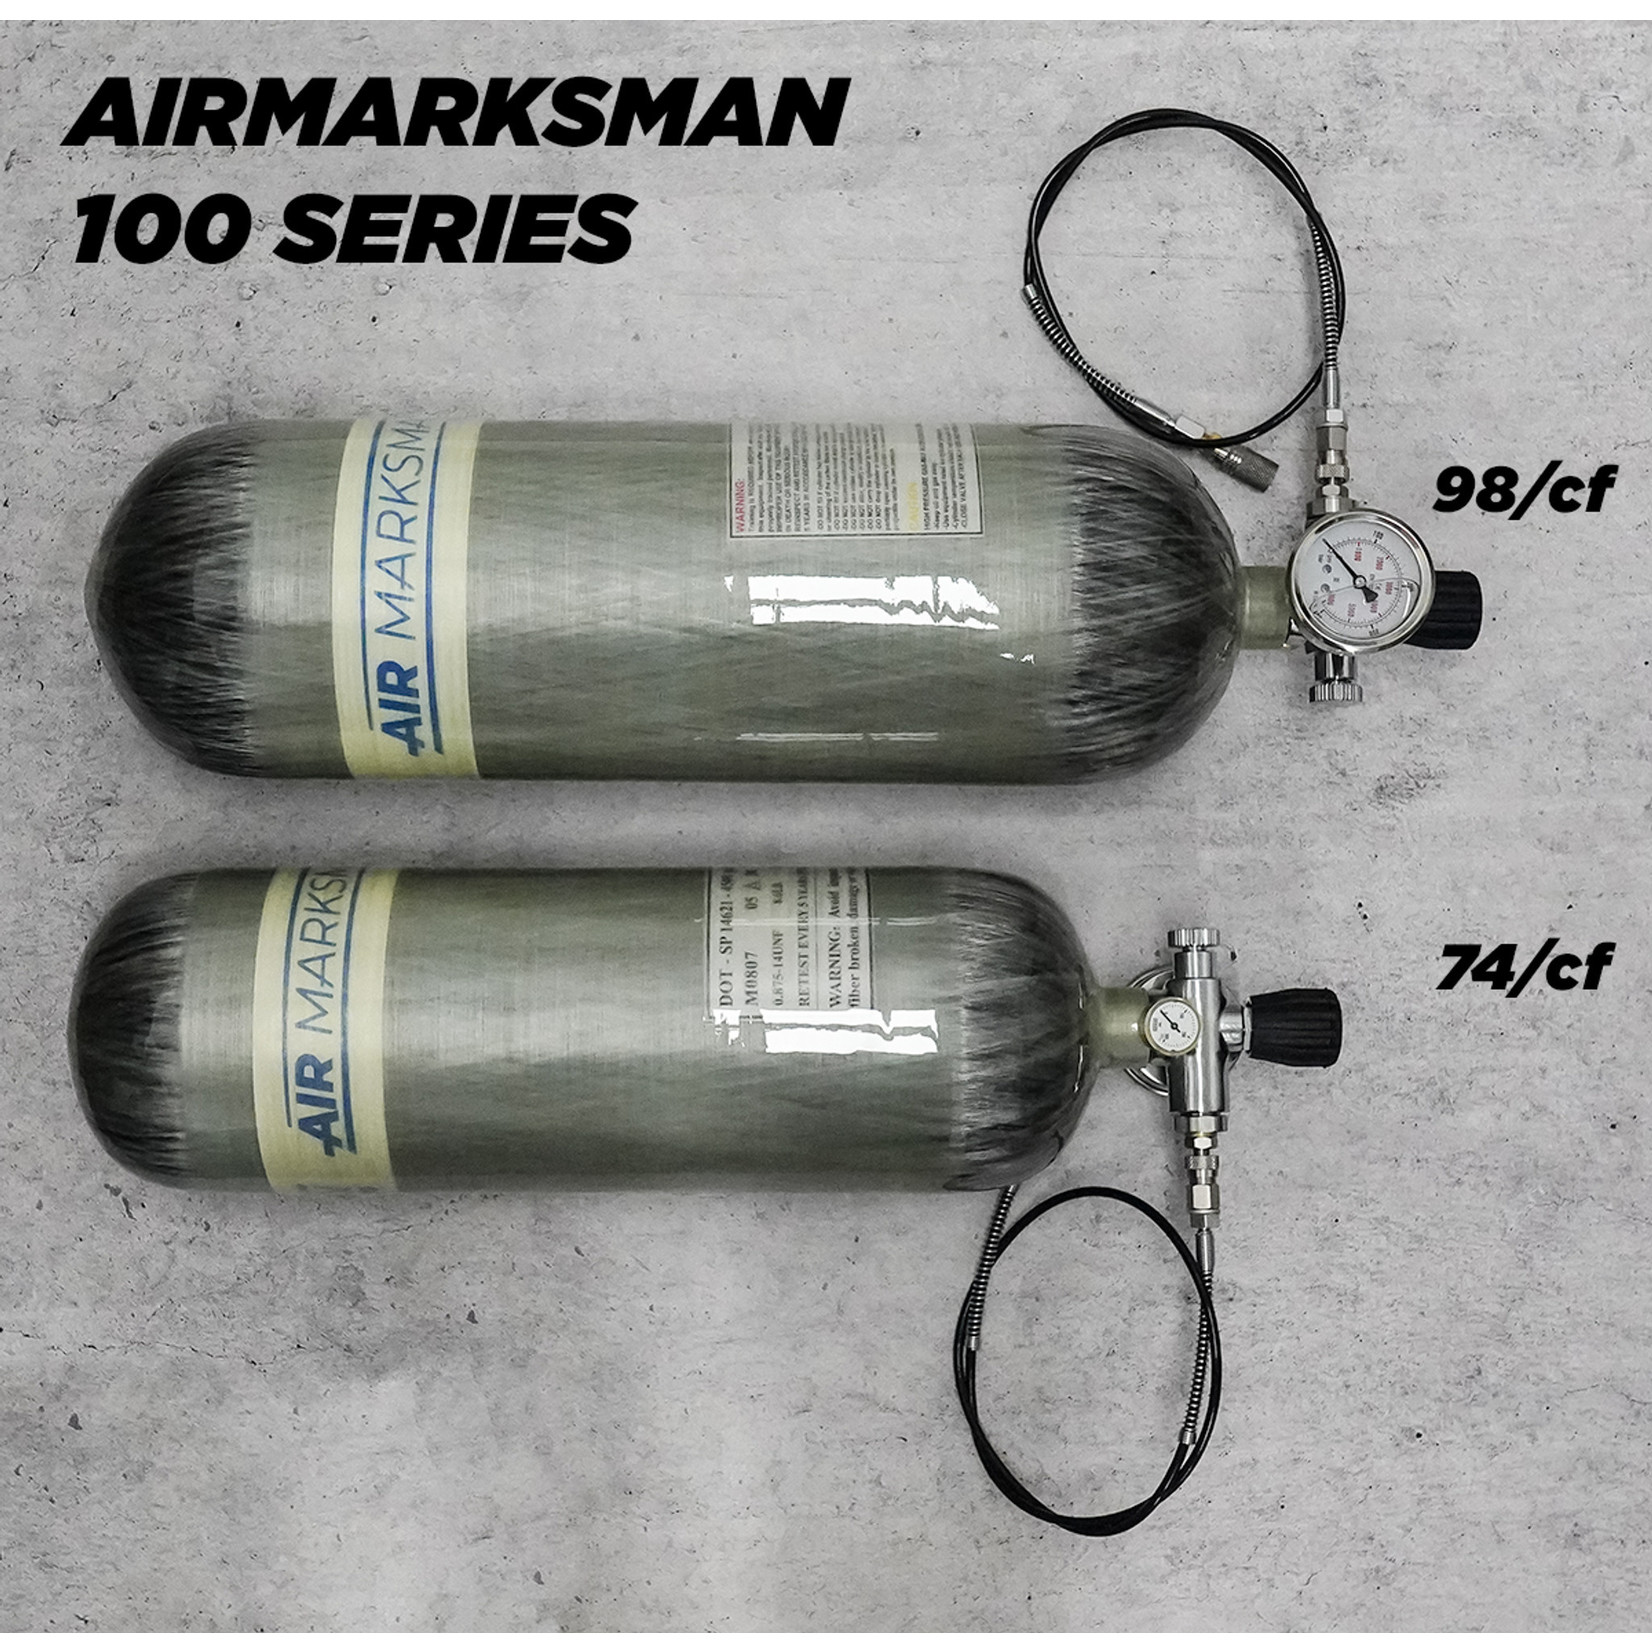 Air Marksman Air Marksman Tanks